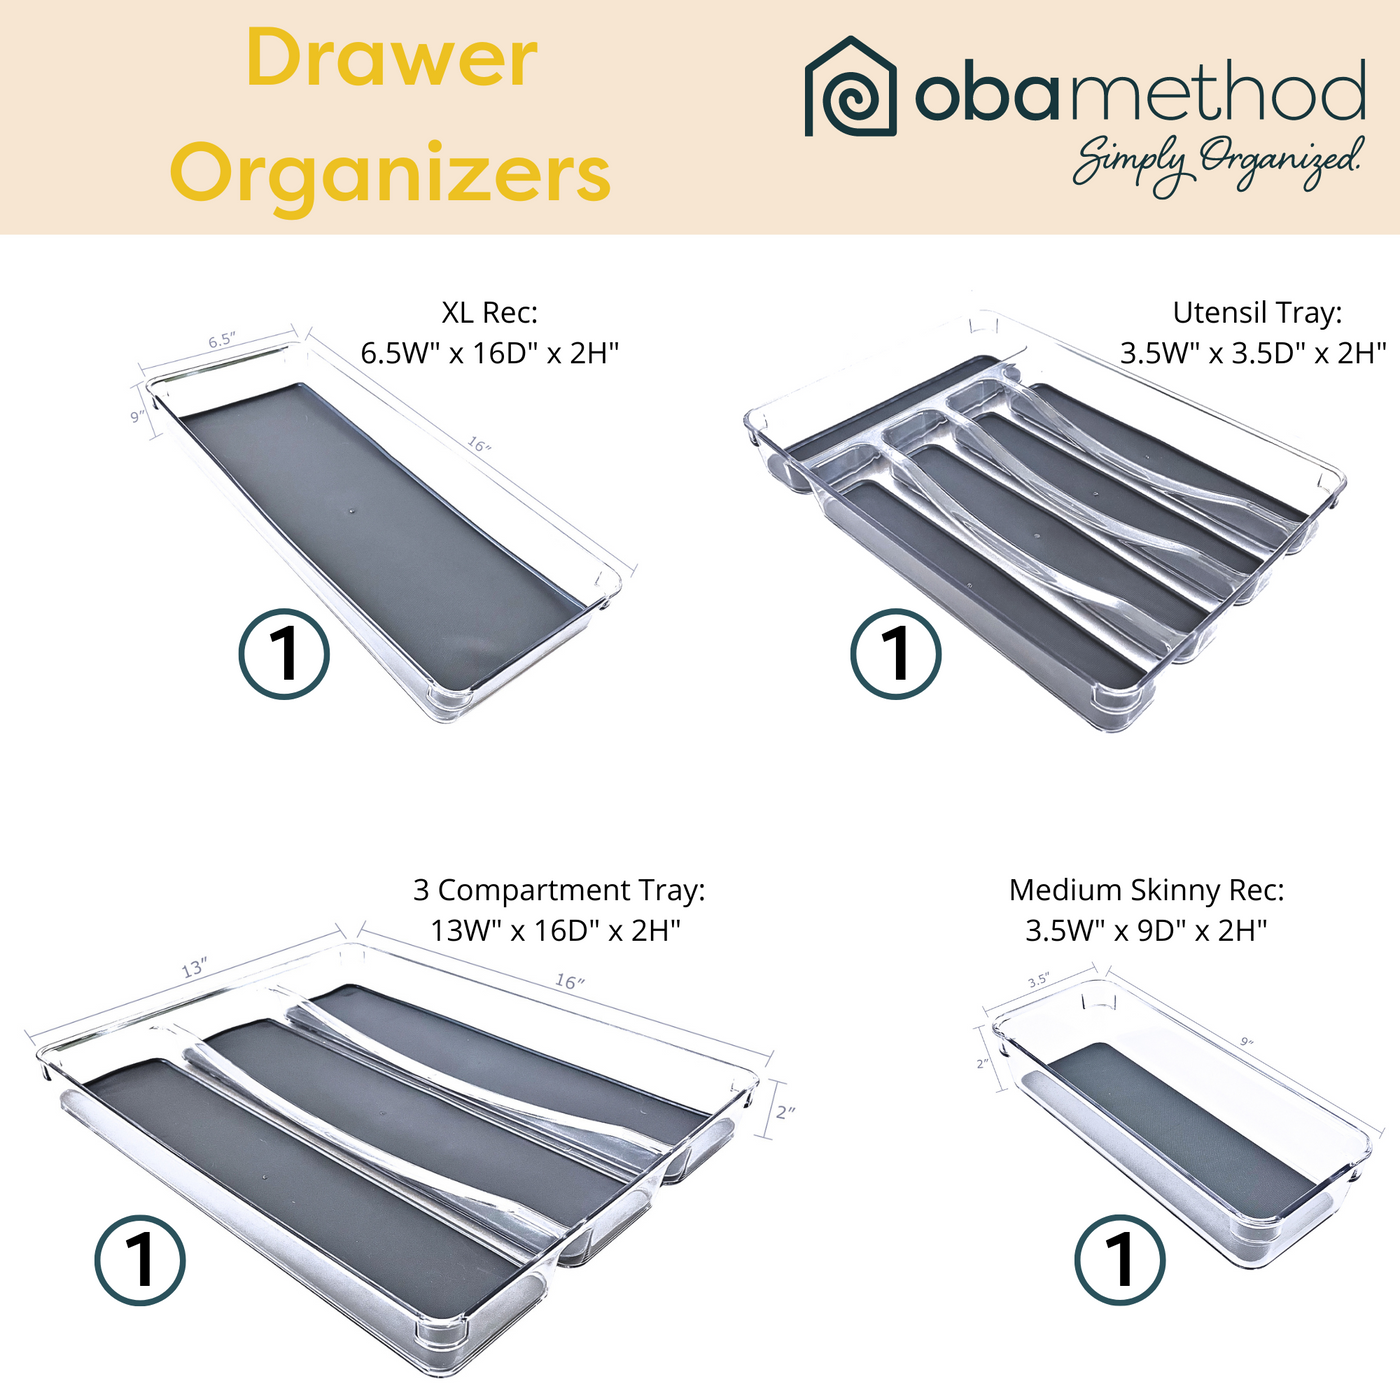 Large Tray Drawer Organizer Dimensions